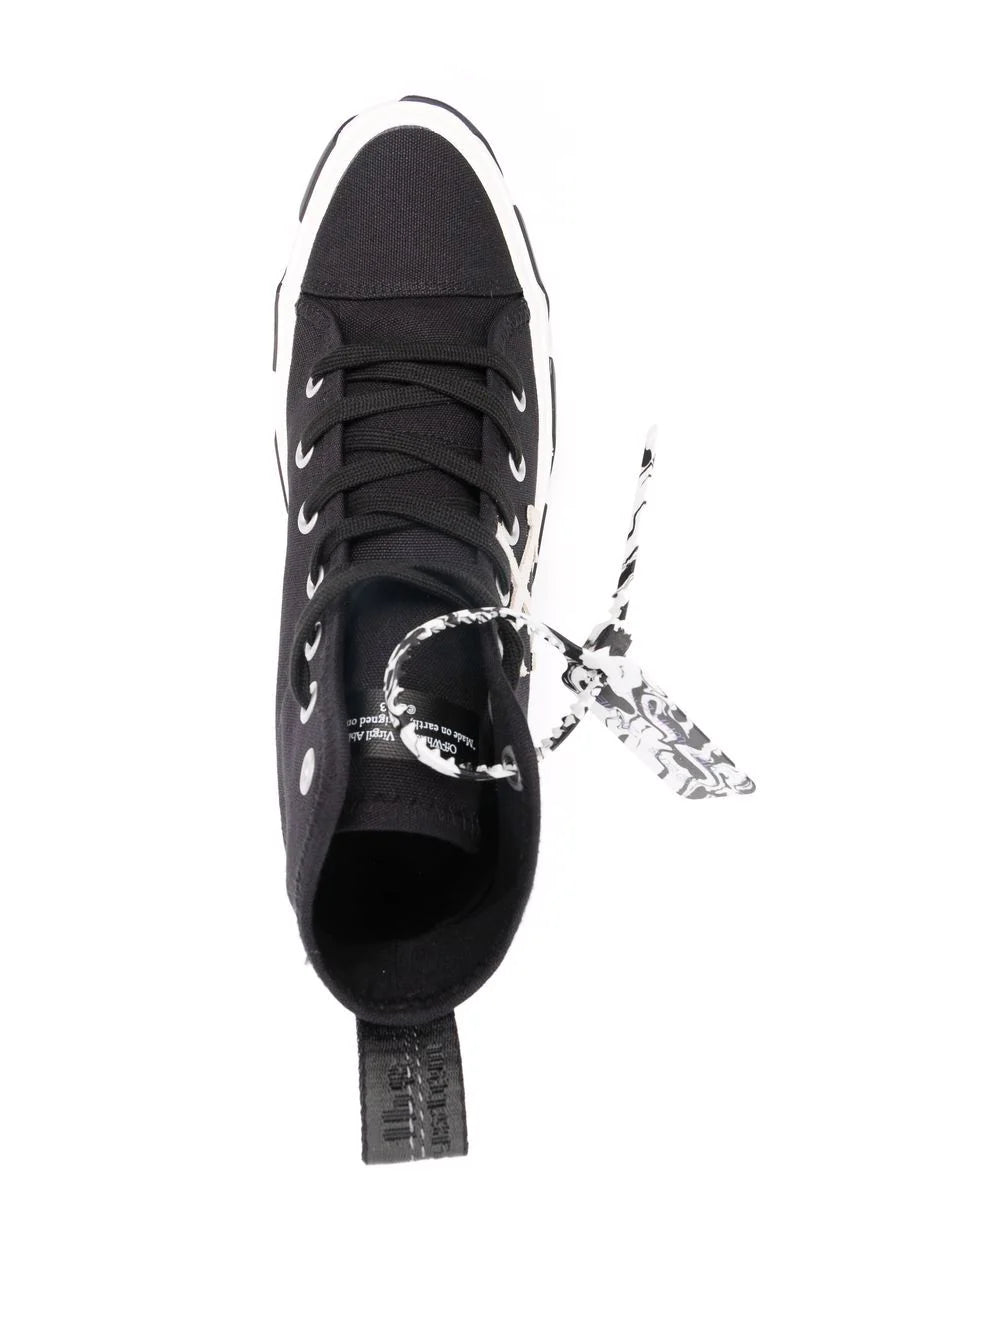 Off-White Black Tenis Vulcanized Sneakers